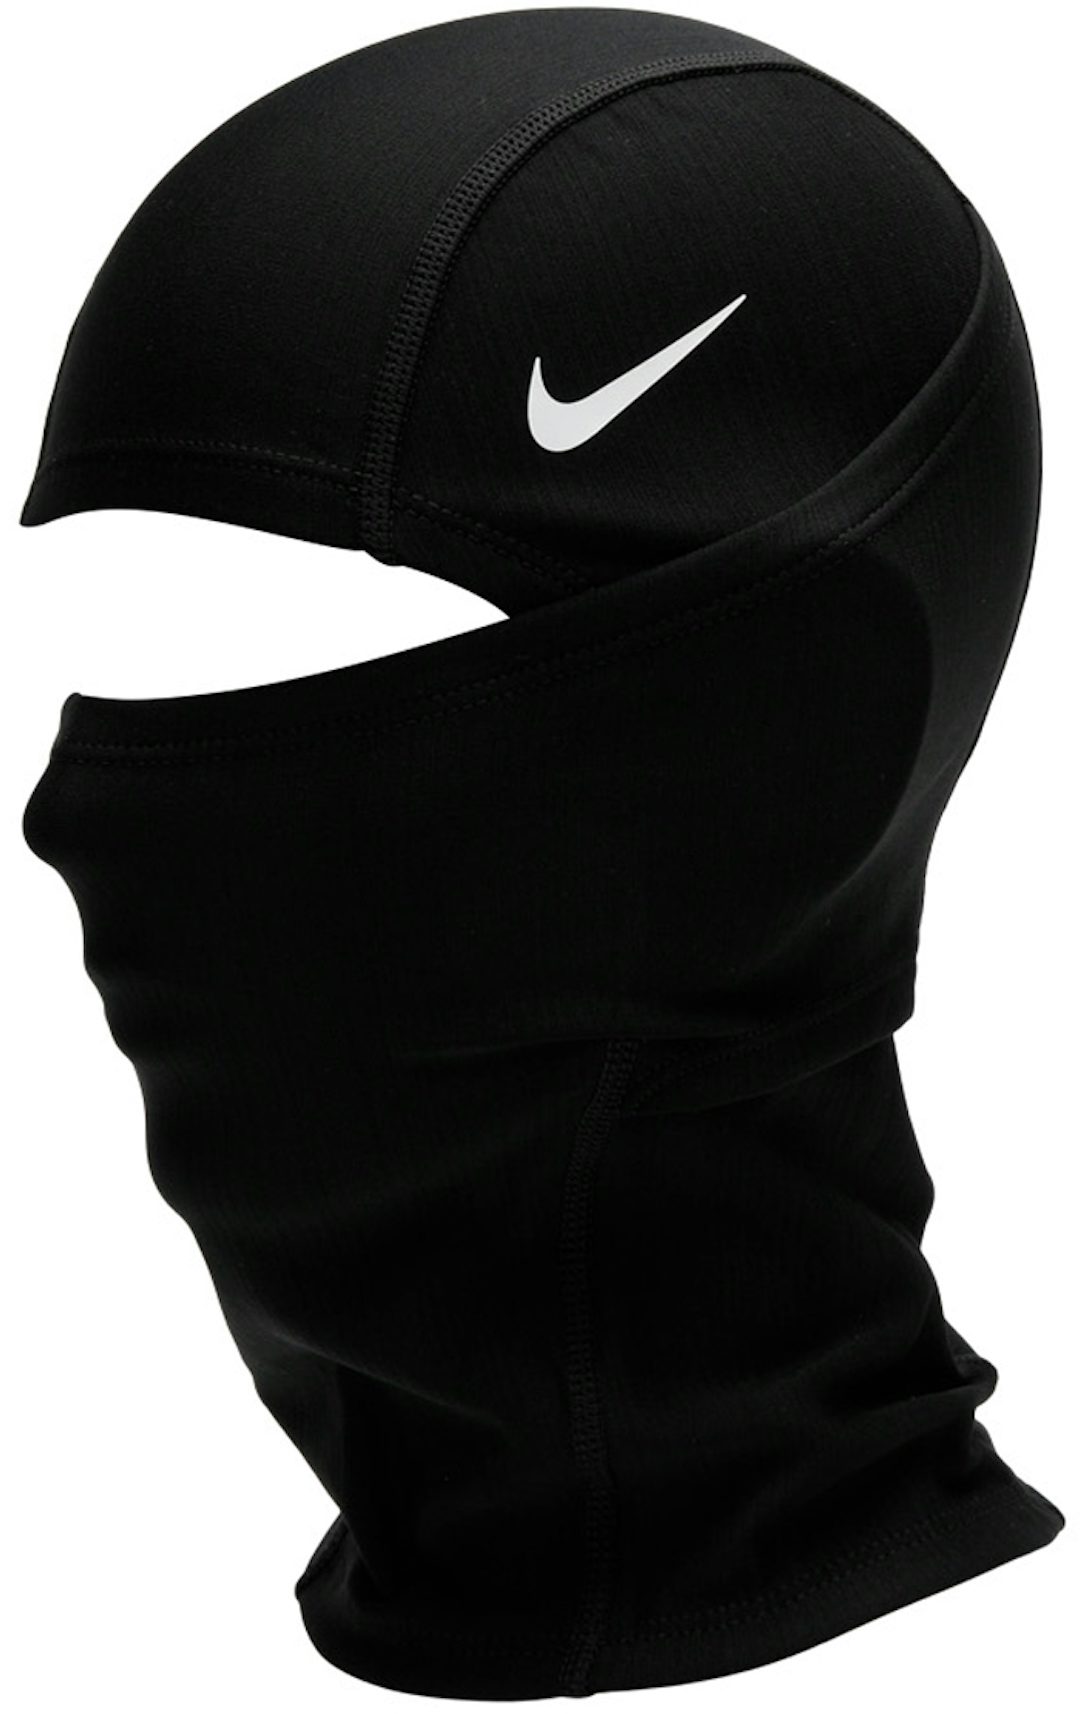 Cagoule Nike Pro THERMA-FIT Hyperwarm coloris noir/blanc - FR